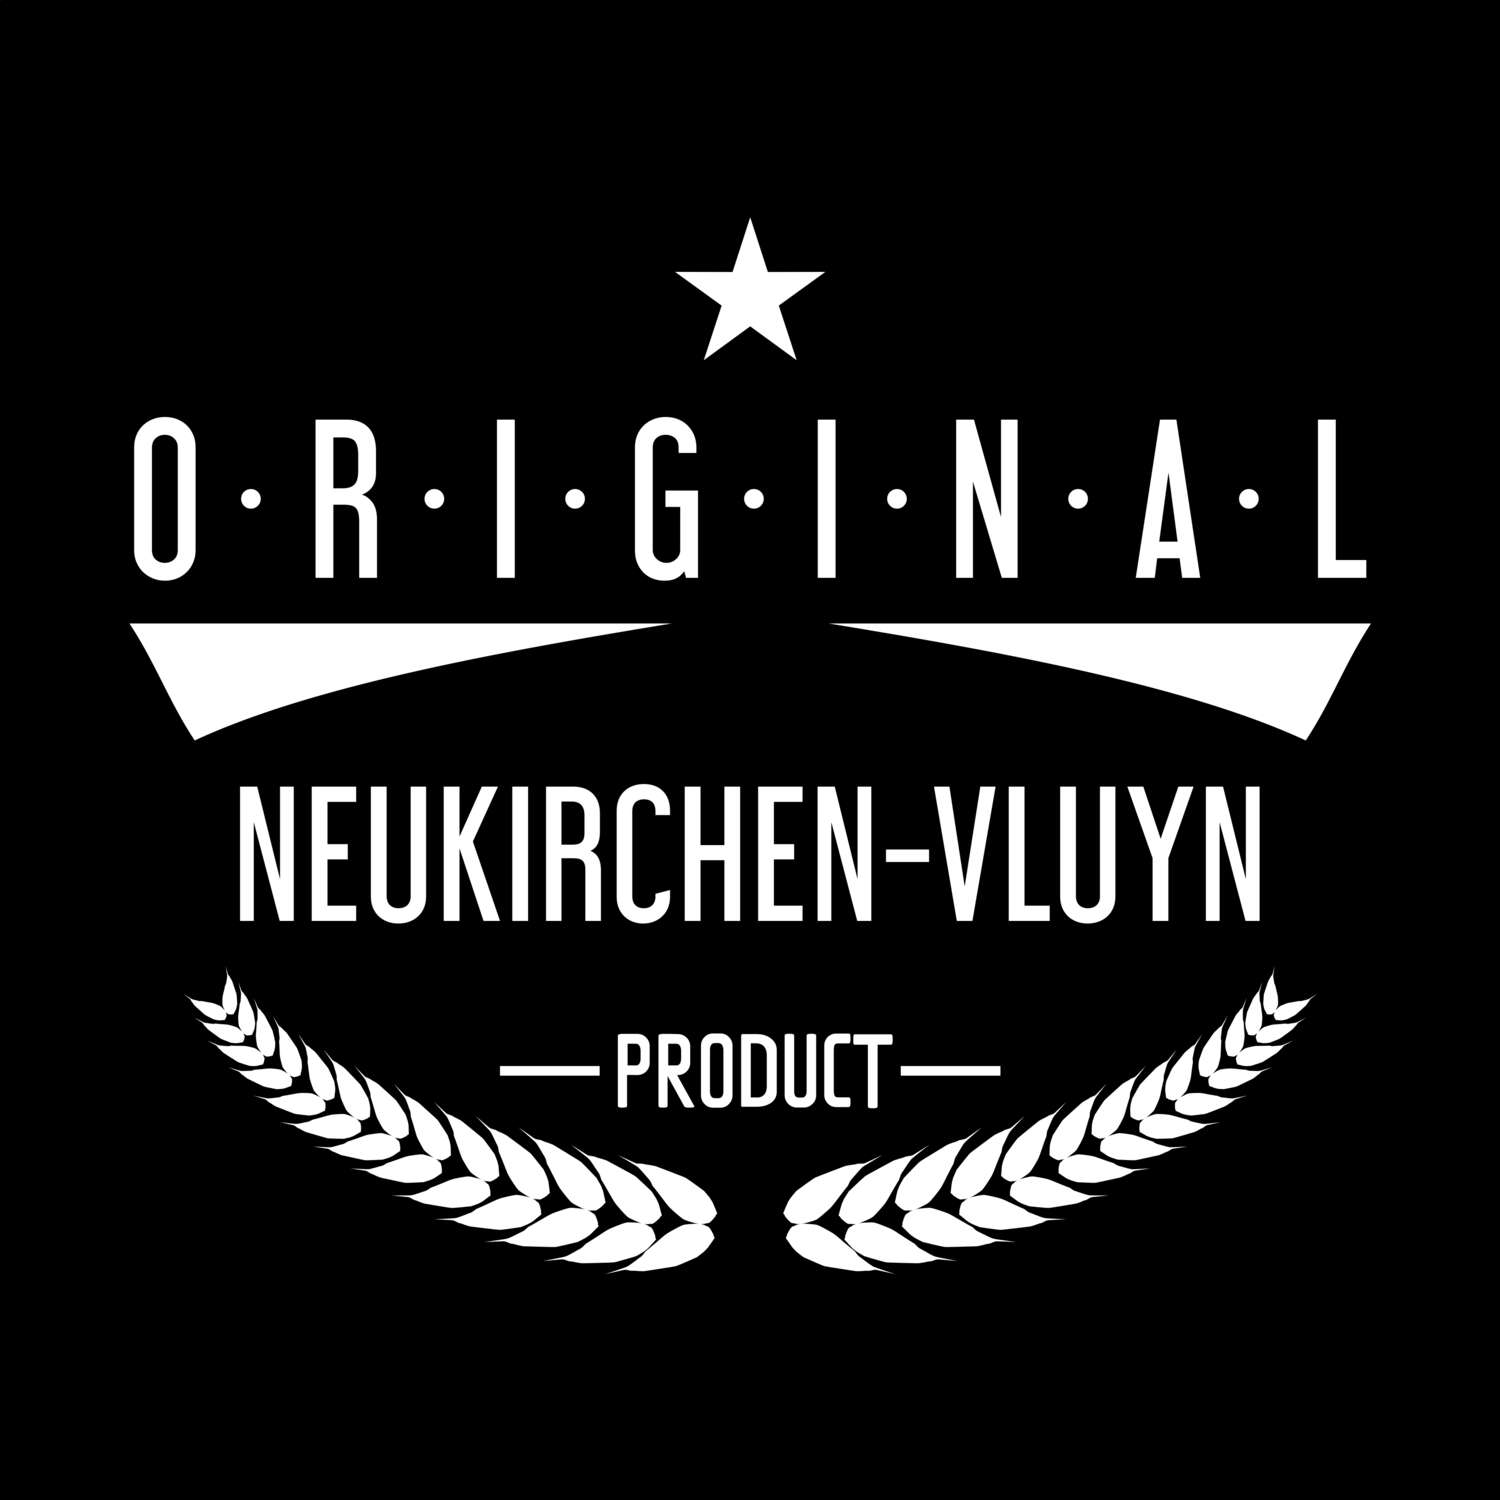 Neukirchen-Vluyn T-Shirt »Original Product«